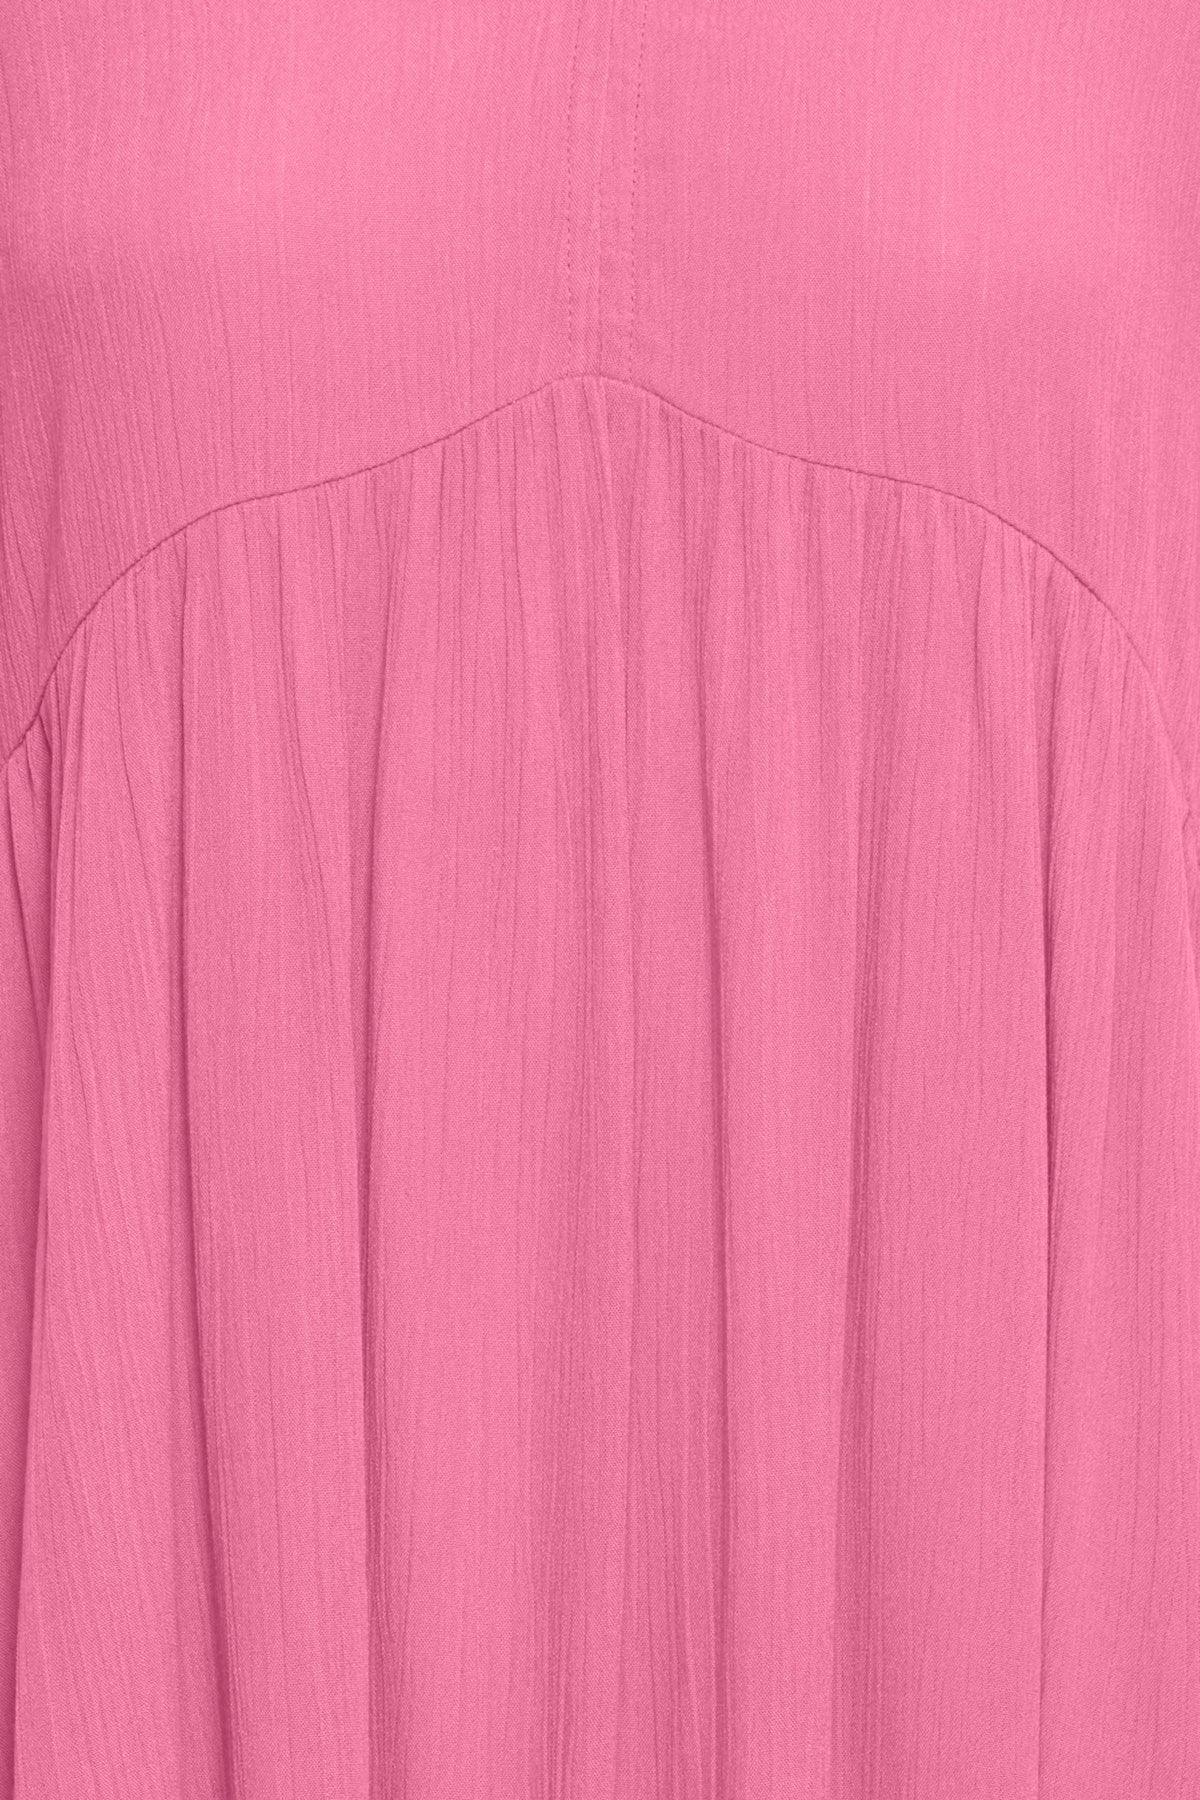 Vestido ICHI Marrakech DR11 Super Pink - ECRU